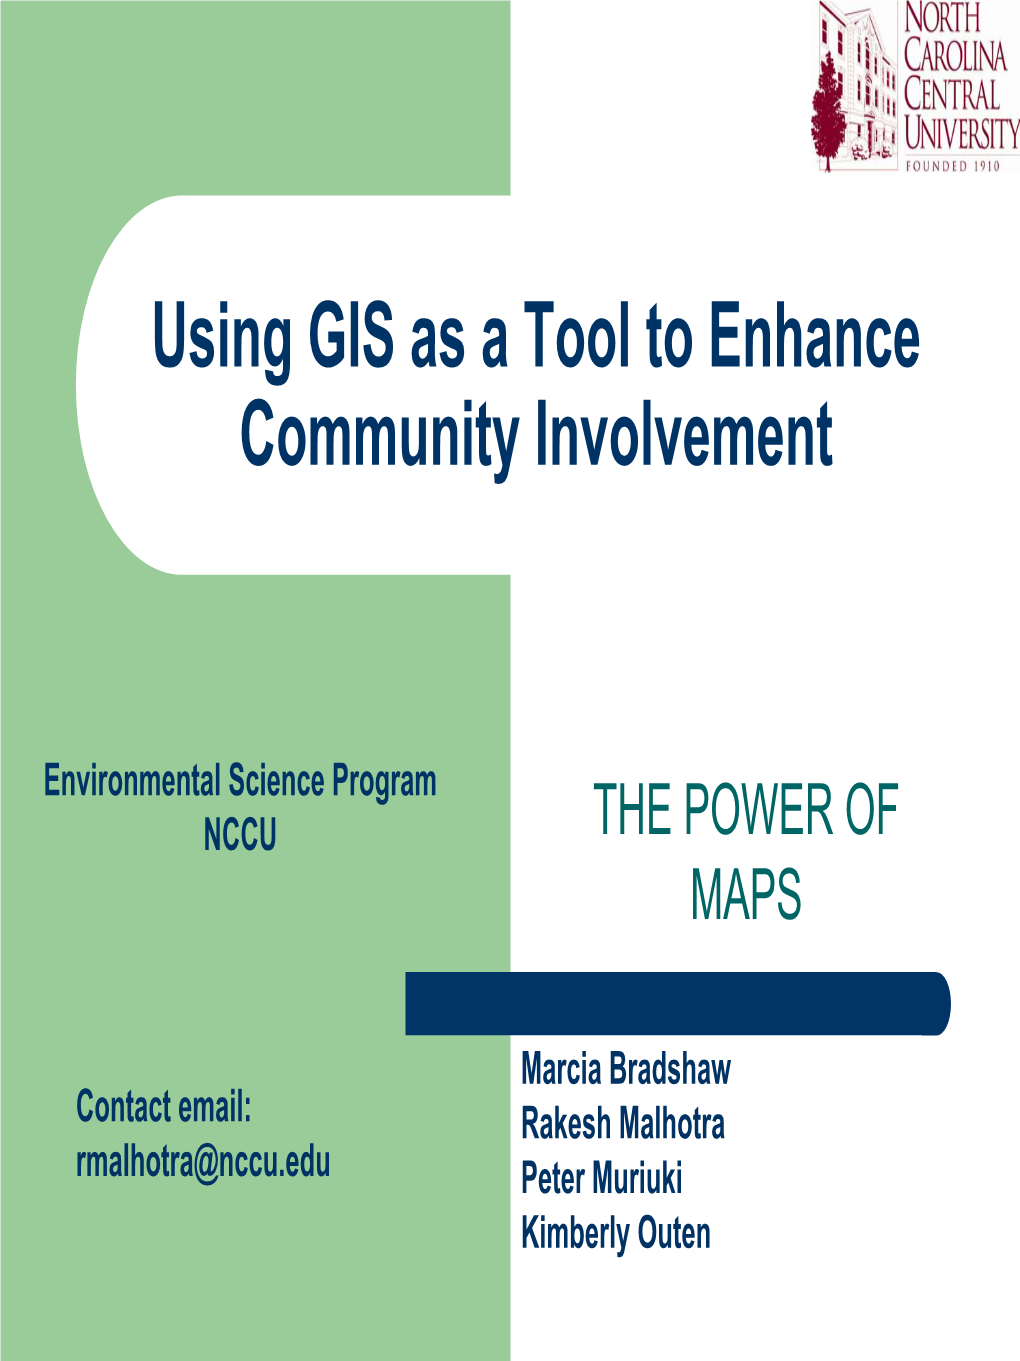 Presentation: Using Gis As a Tool to Enhance Community